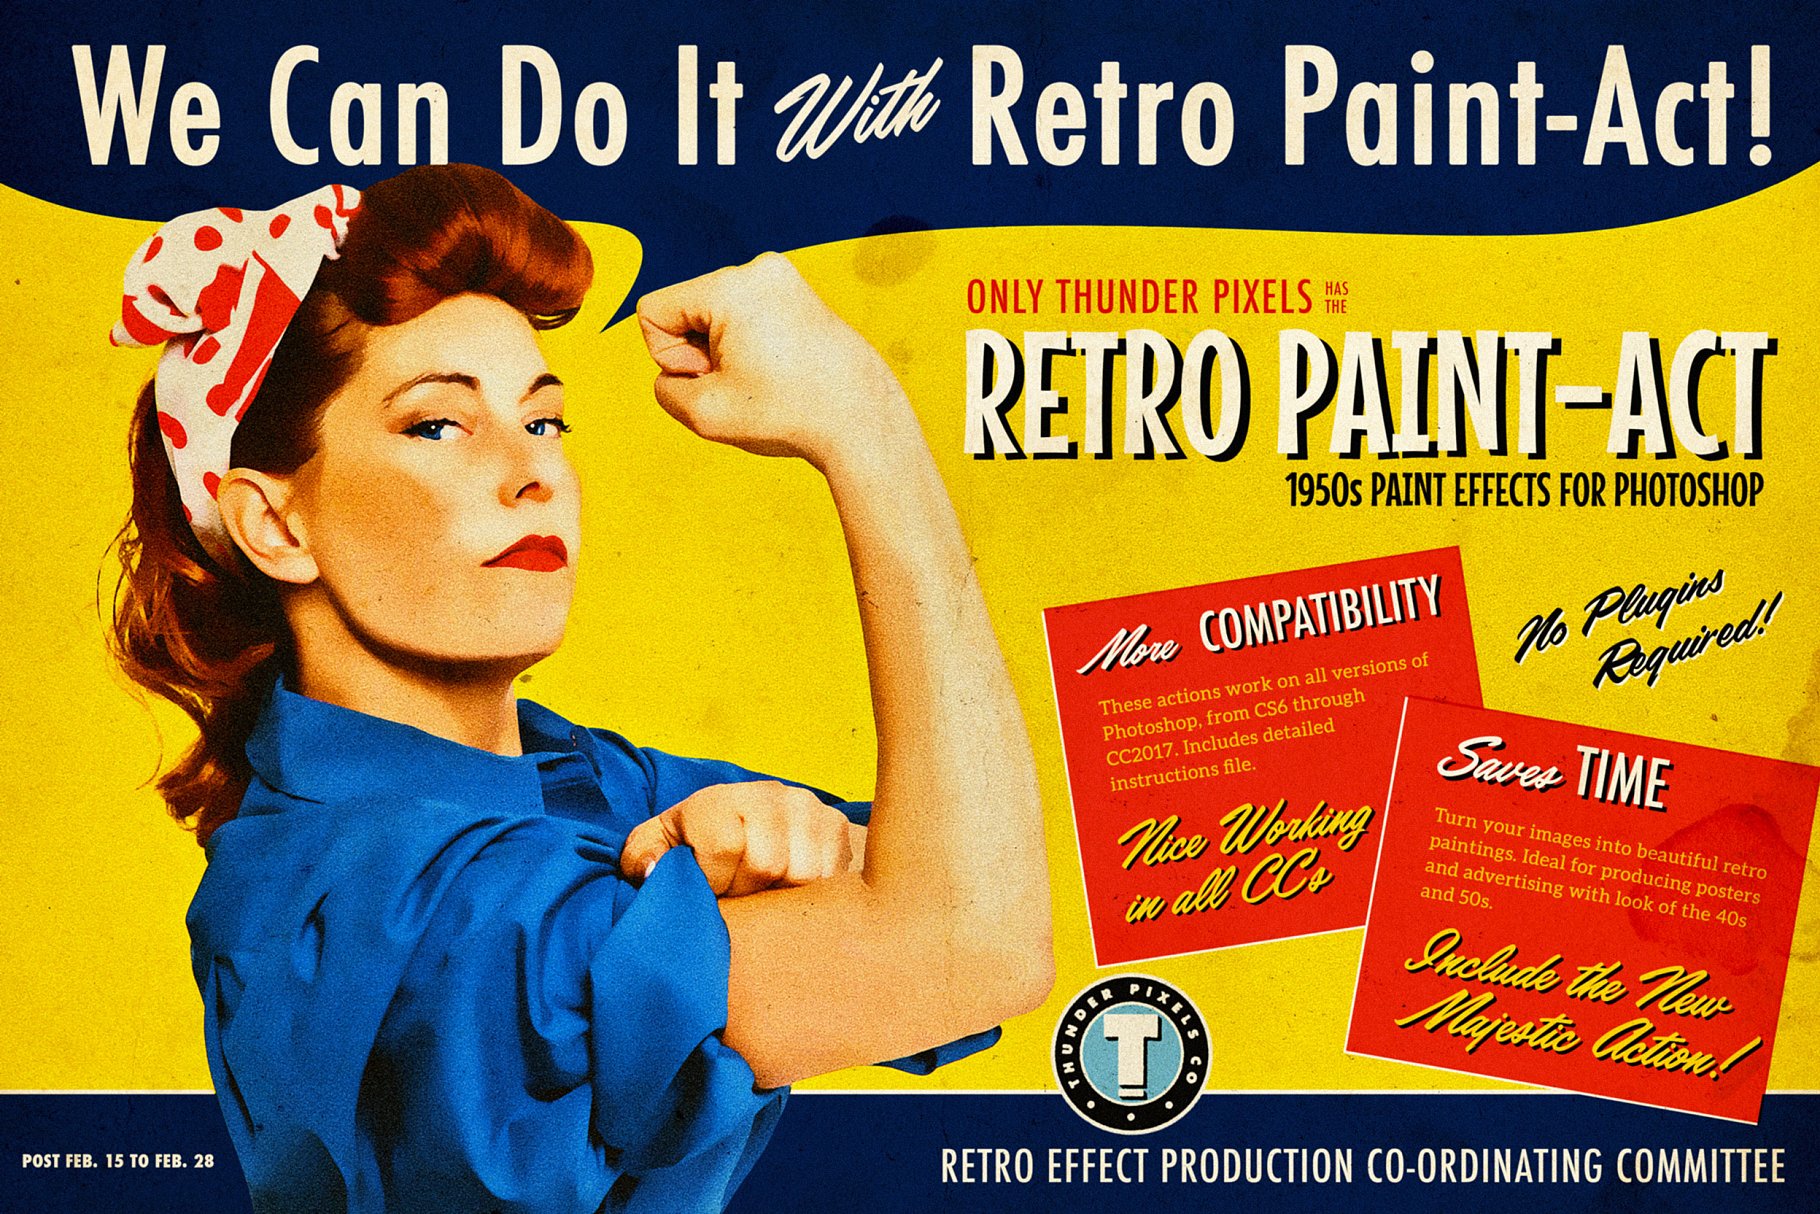 复刻旧时代杂志和电影海报印刷效果PS动作 Retro Paint-Act – PS Action + Kit插图